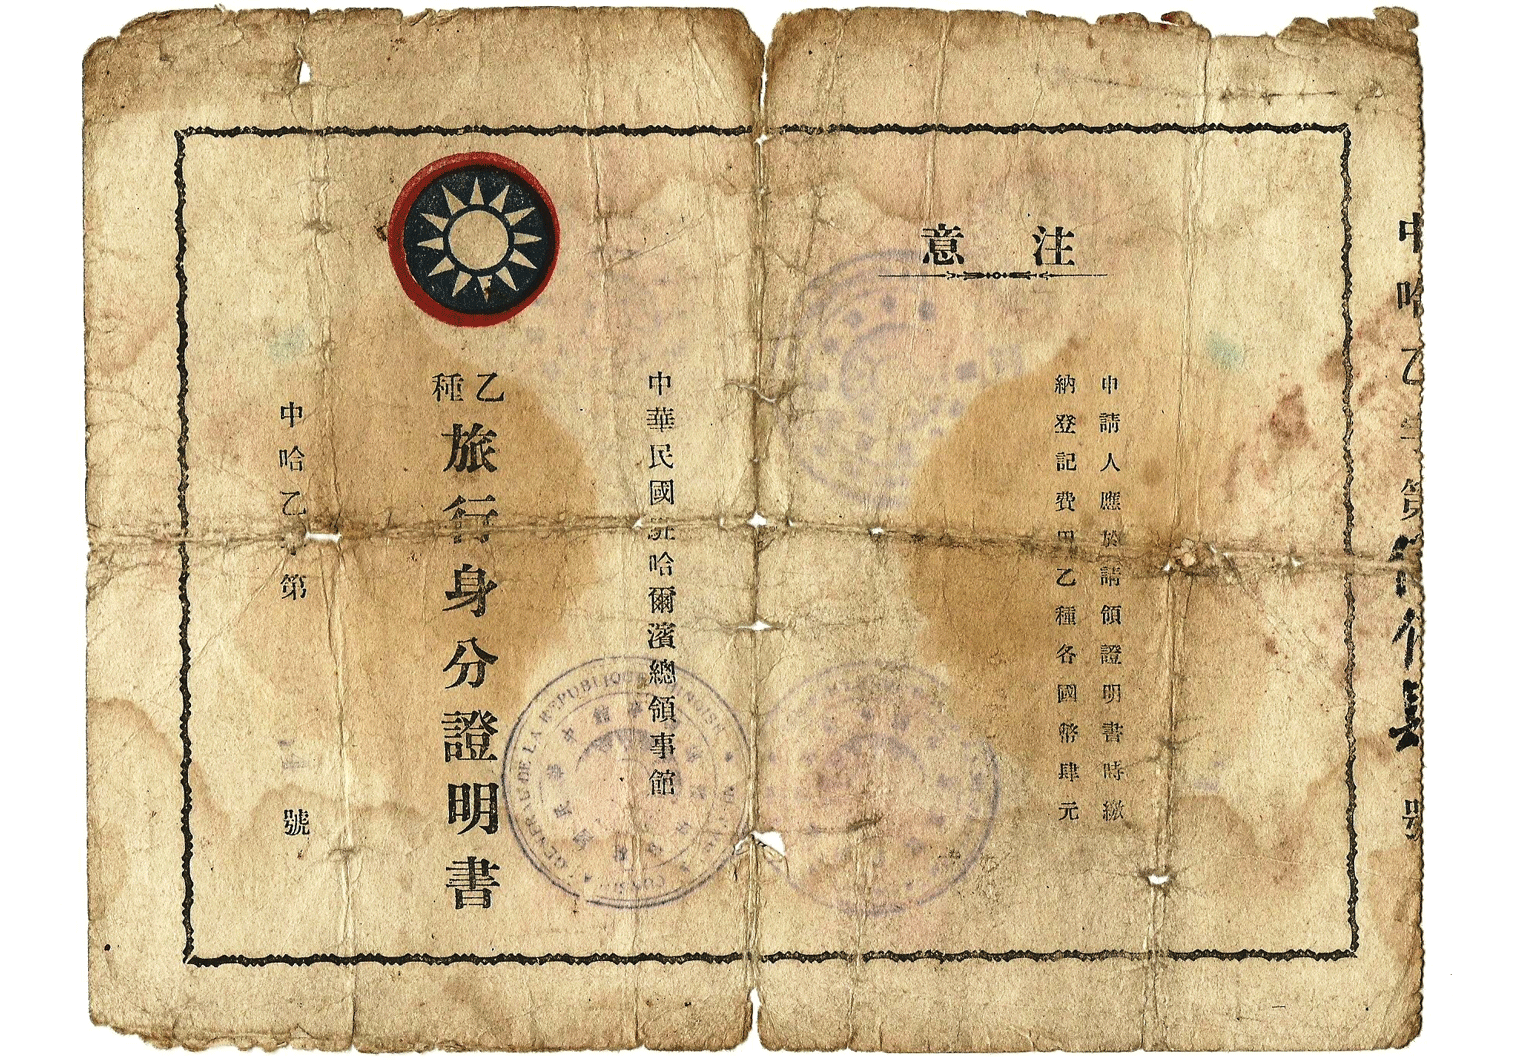 WW2 Chinese travel document